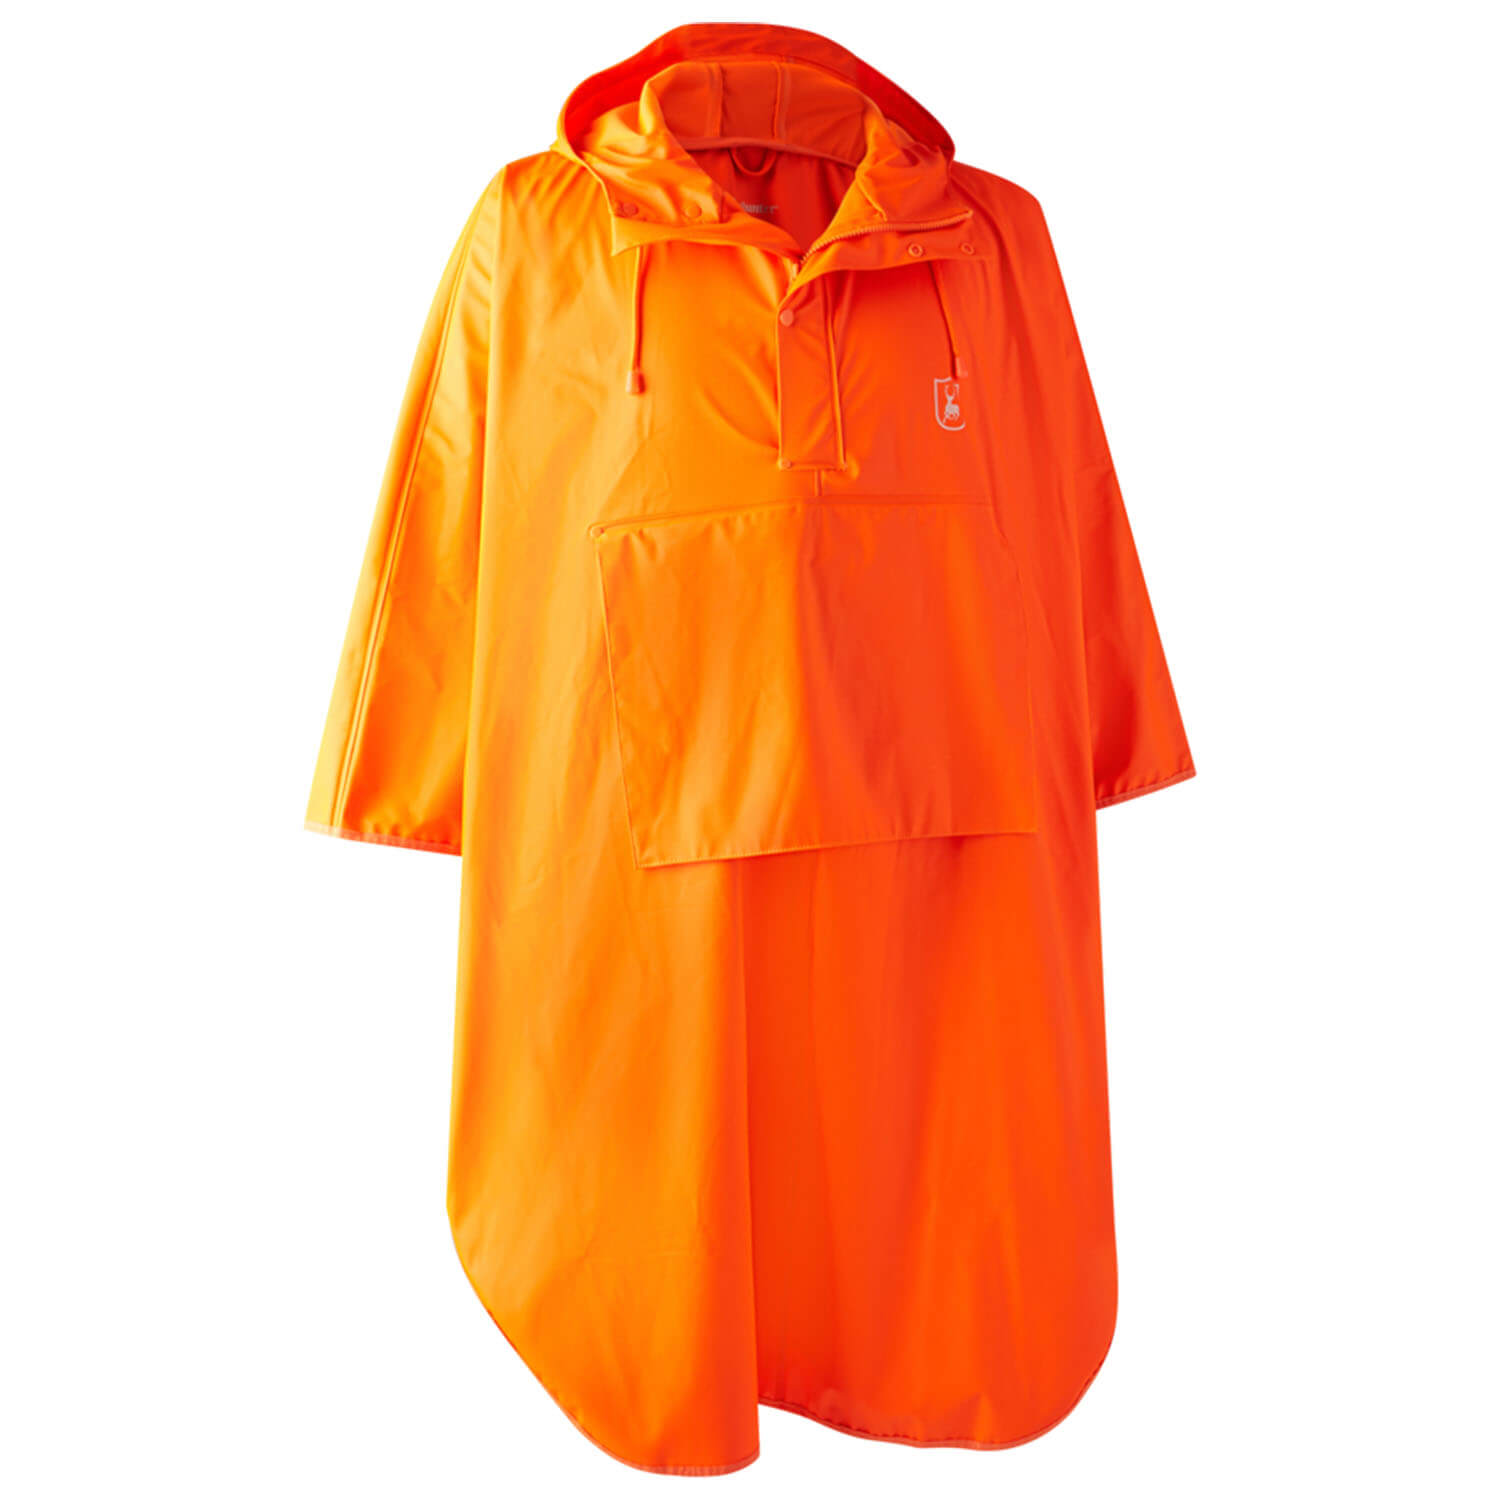  Deerhunter Hurricane regenponcho (oranje) -  Drijfjacht